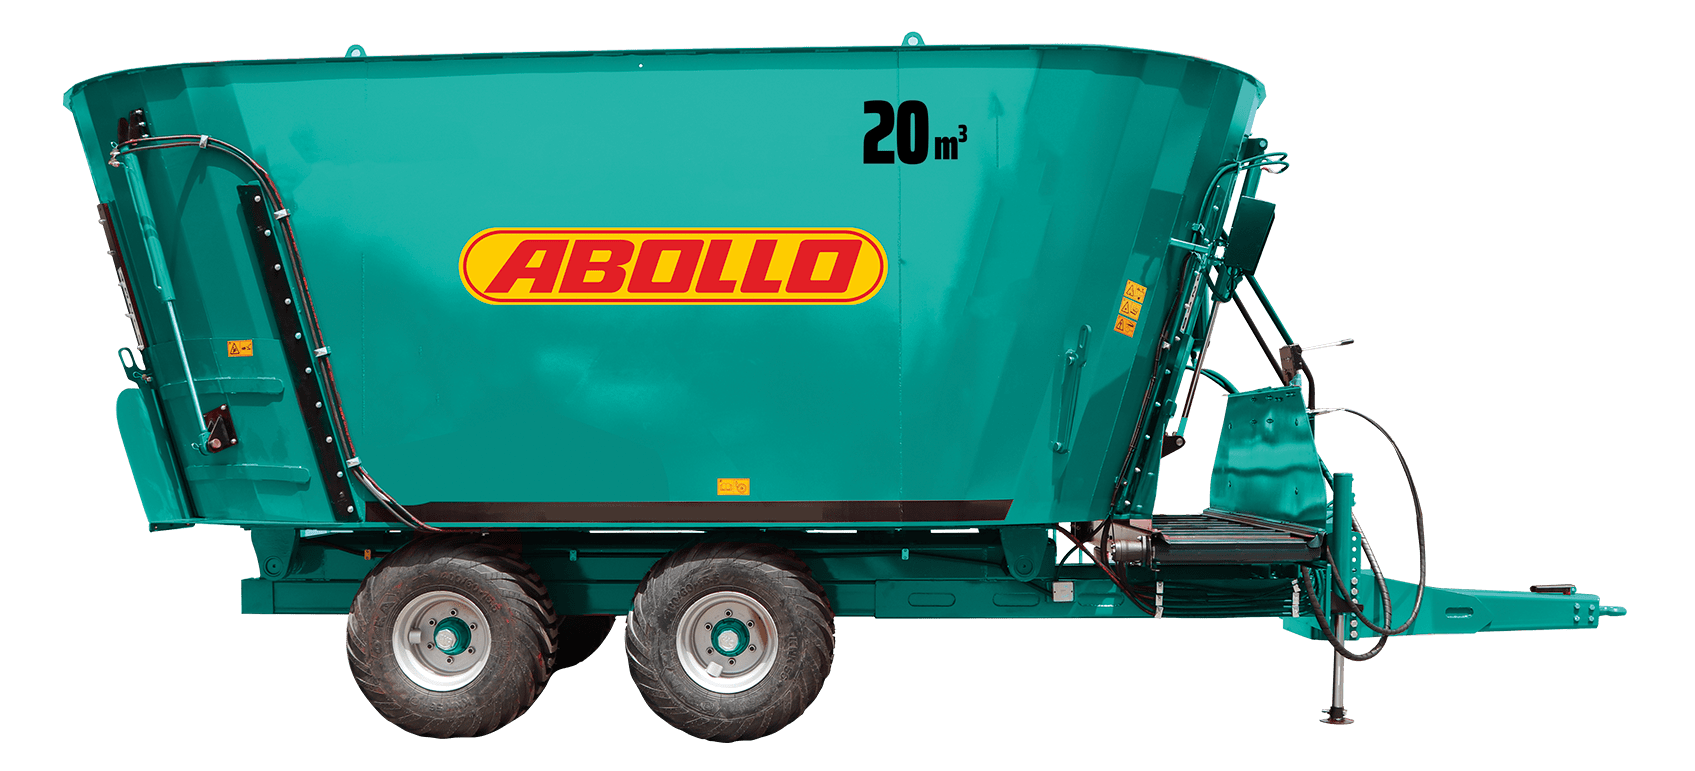 Fodder Mixer | Abollo Agricultural Machinery